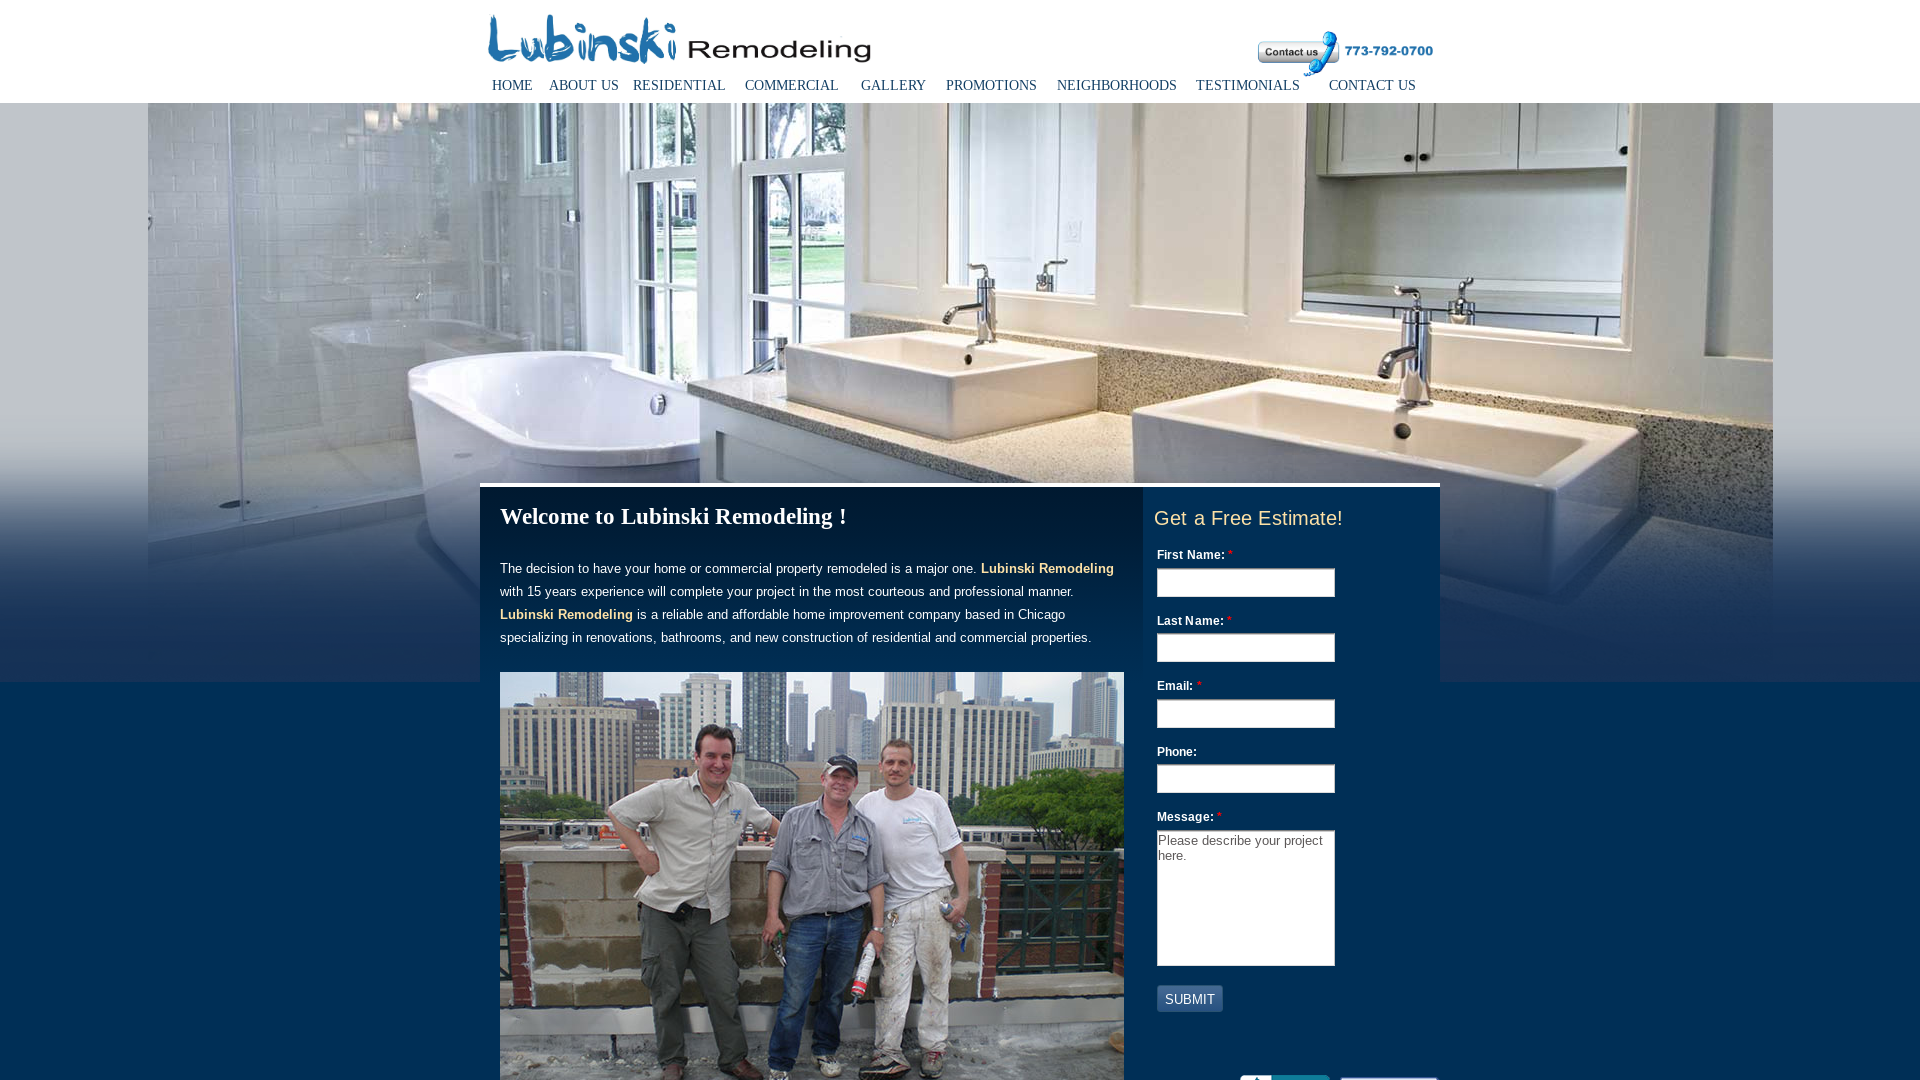 Lubinski Remodeling